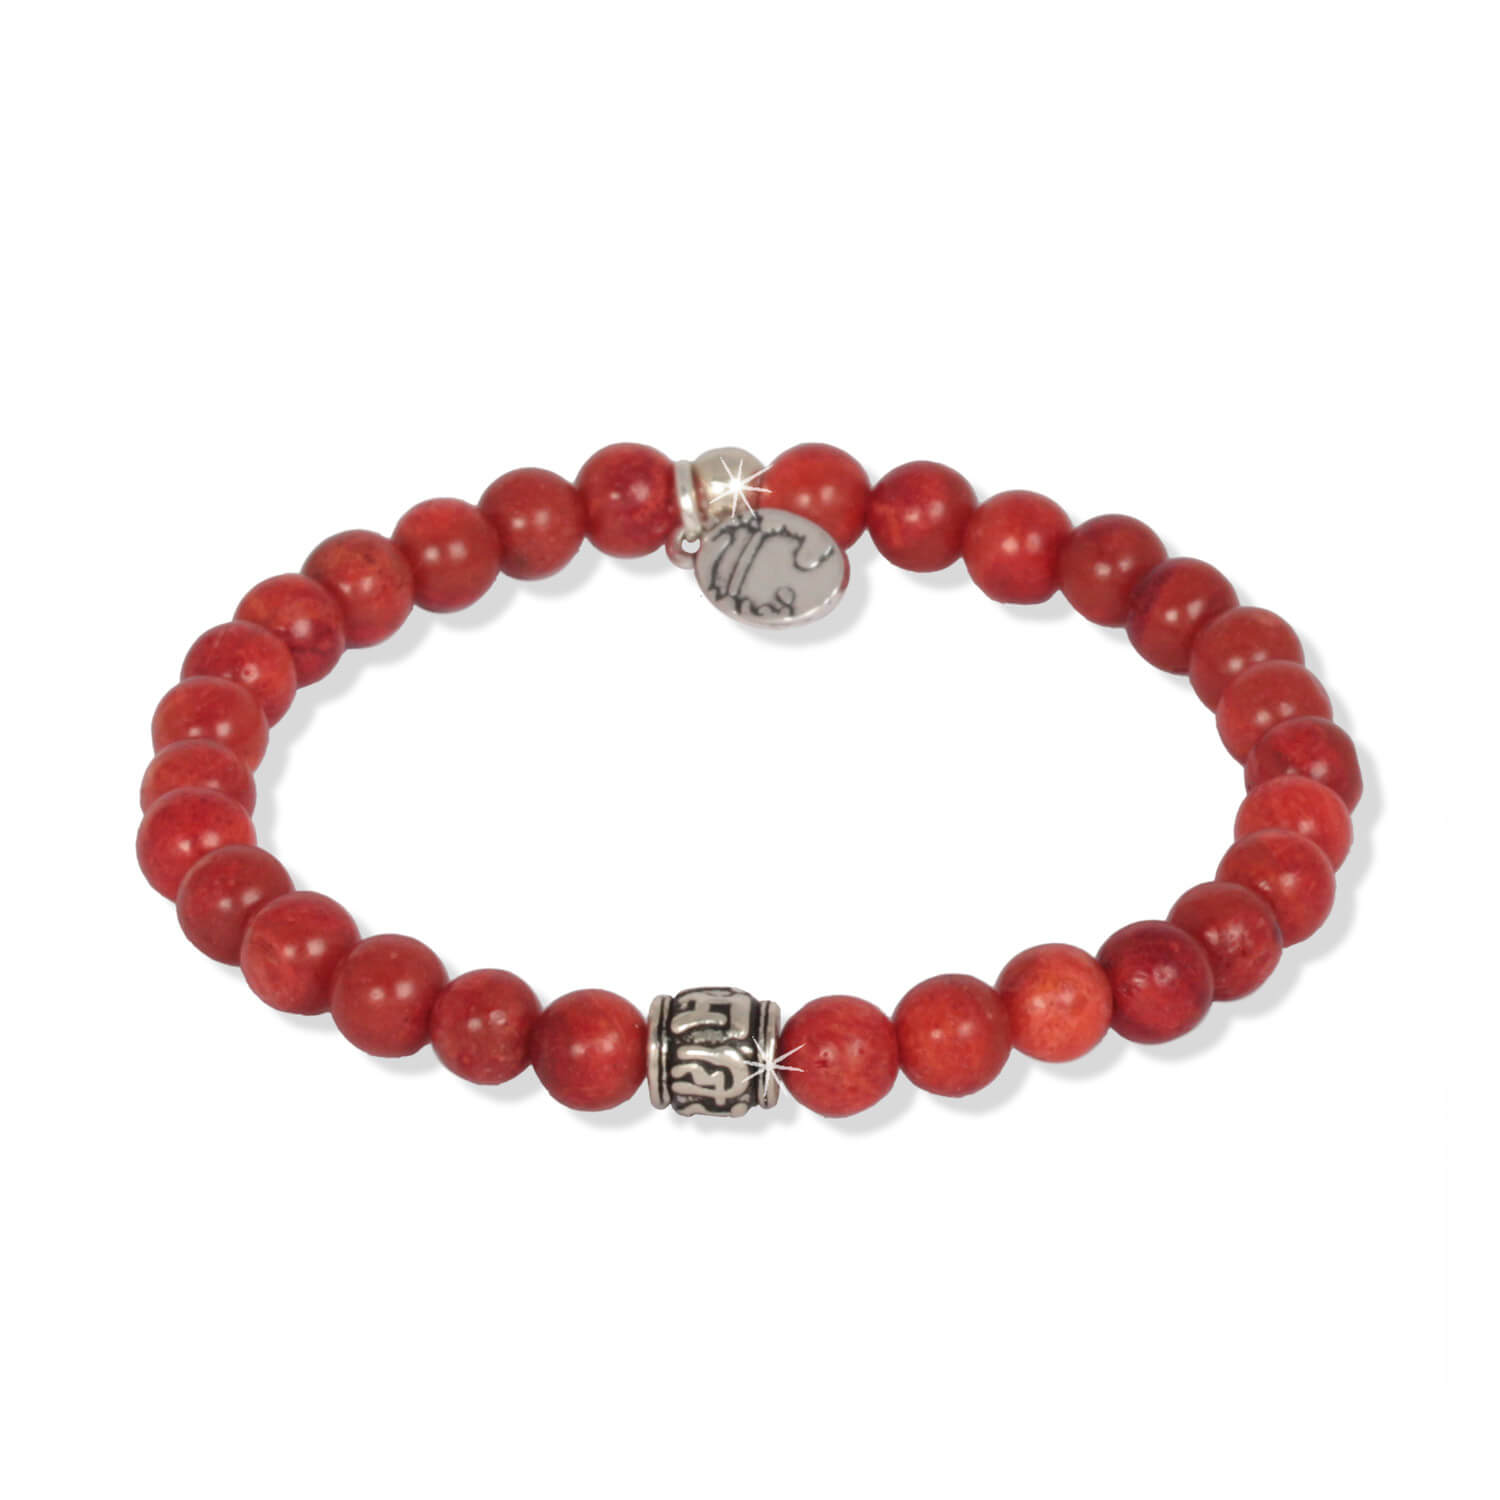 Little Coral - Mantra Beads gemstone bracelet for men with sterling silver, 6 mm